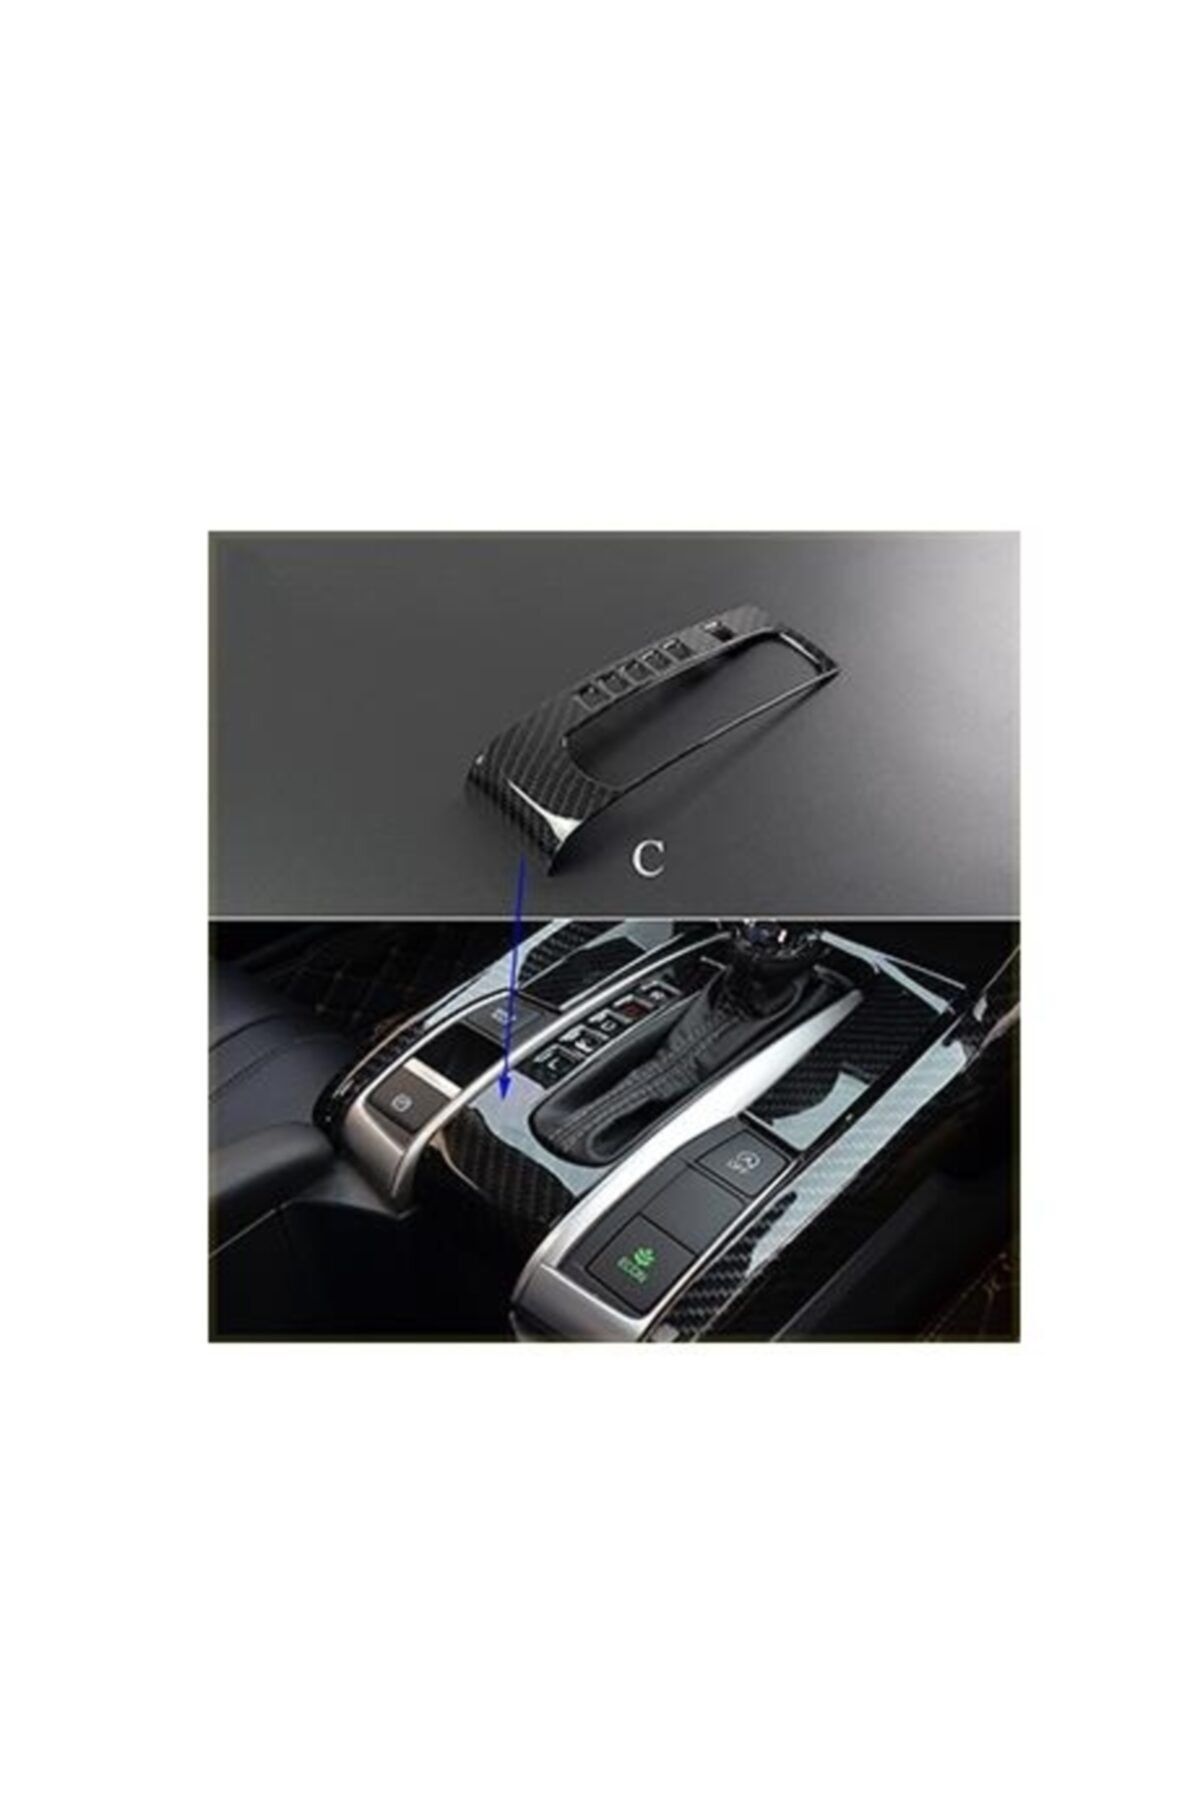 OLED GARAJ Honda Civic İçin Uyumlu Karbon Otomatik Vites Kaplama 2016-2020 Fc5